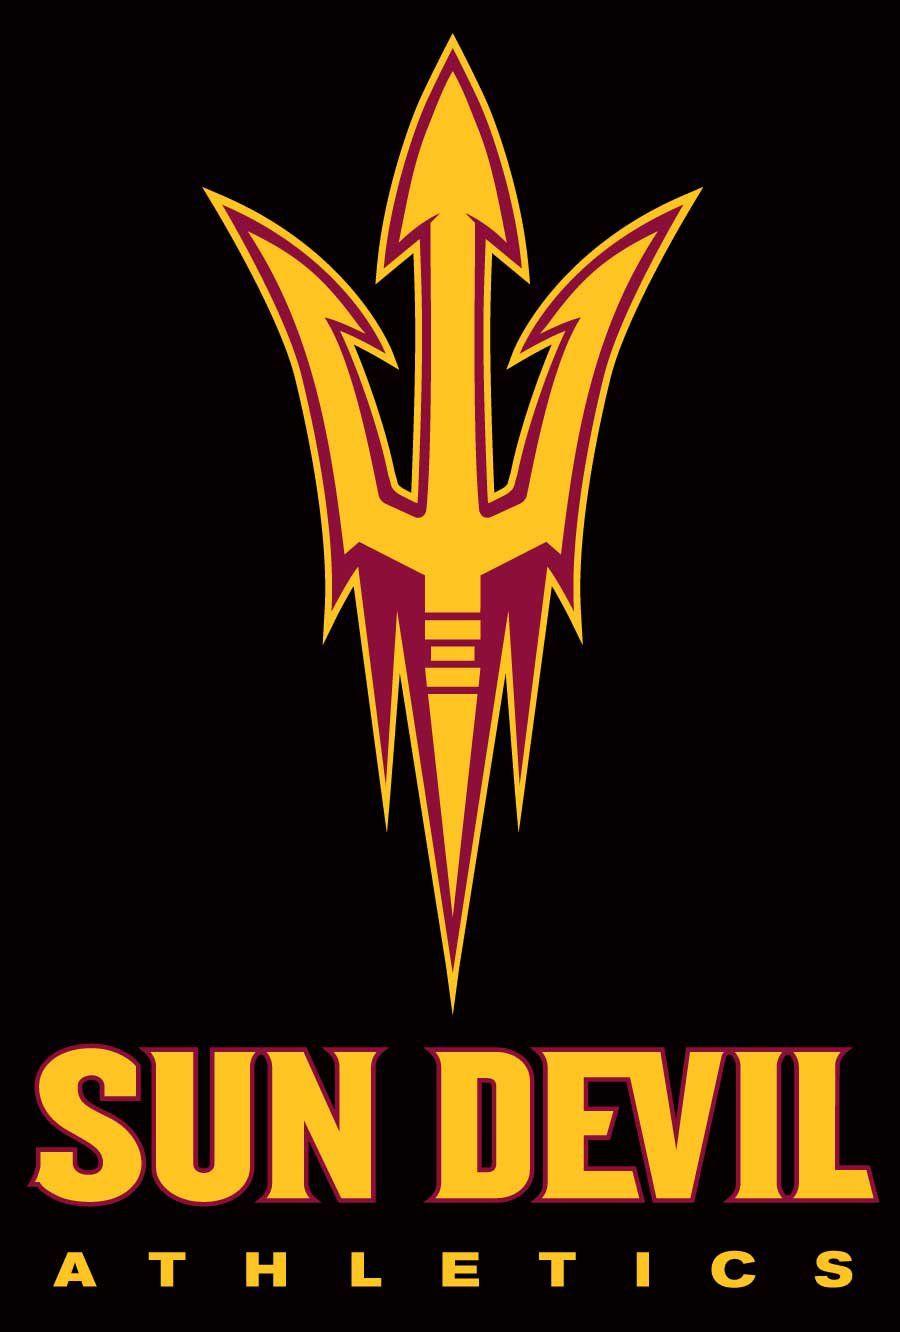 Asu Pitchfork Logo - Sun devil pitchfork Logos